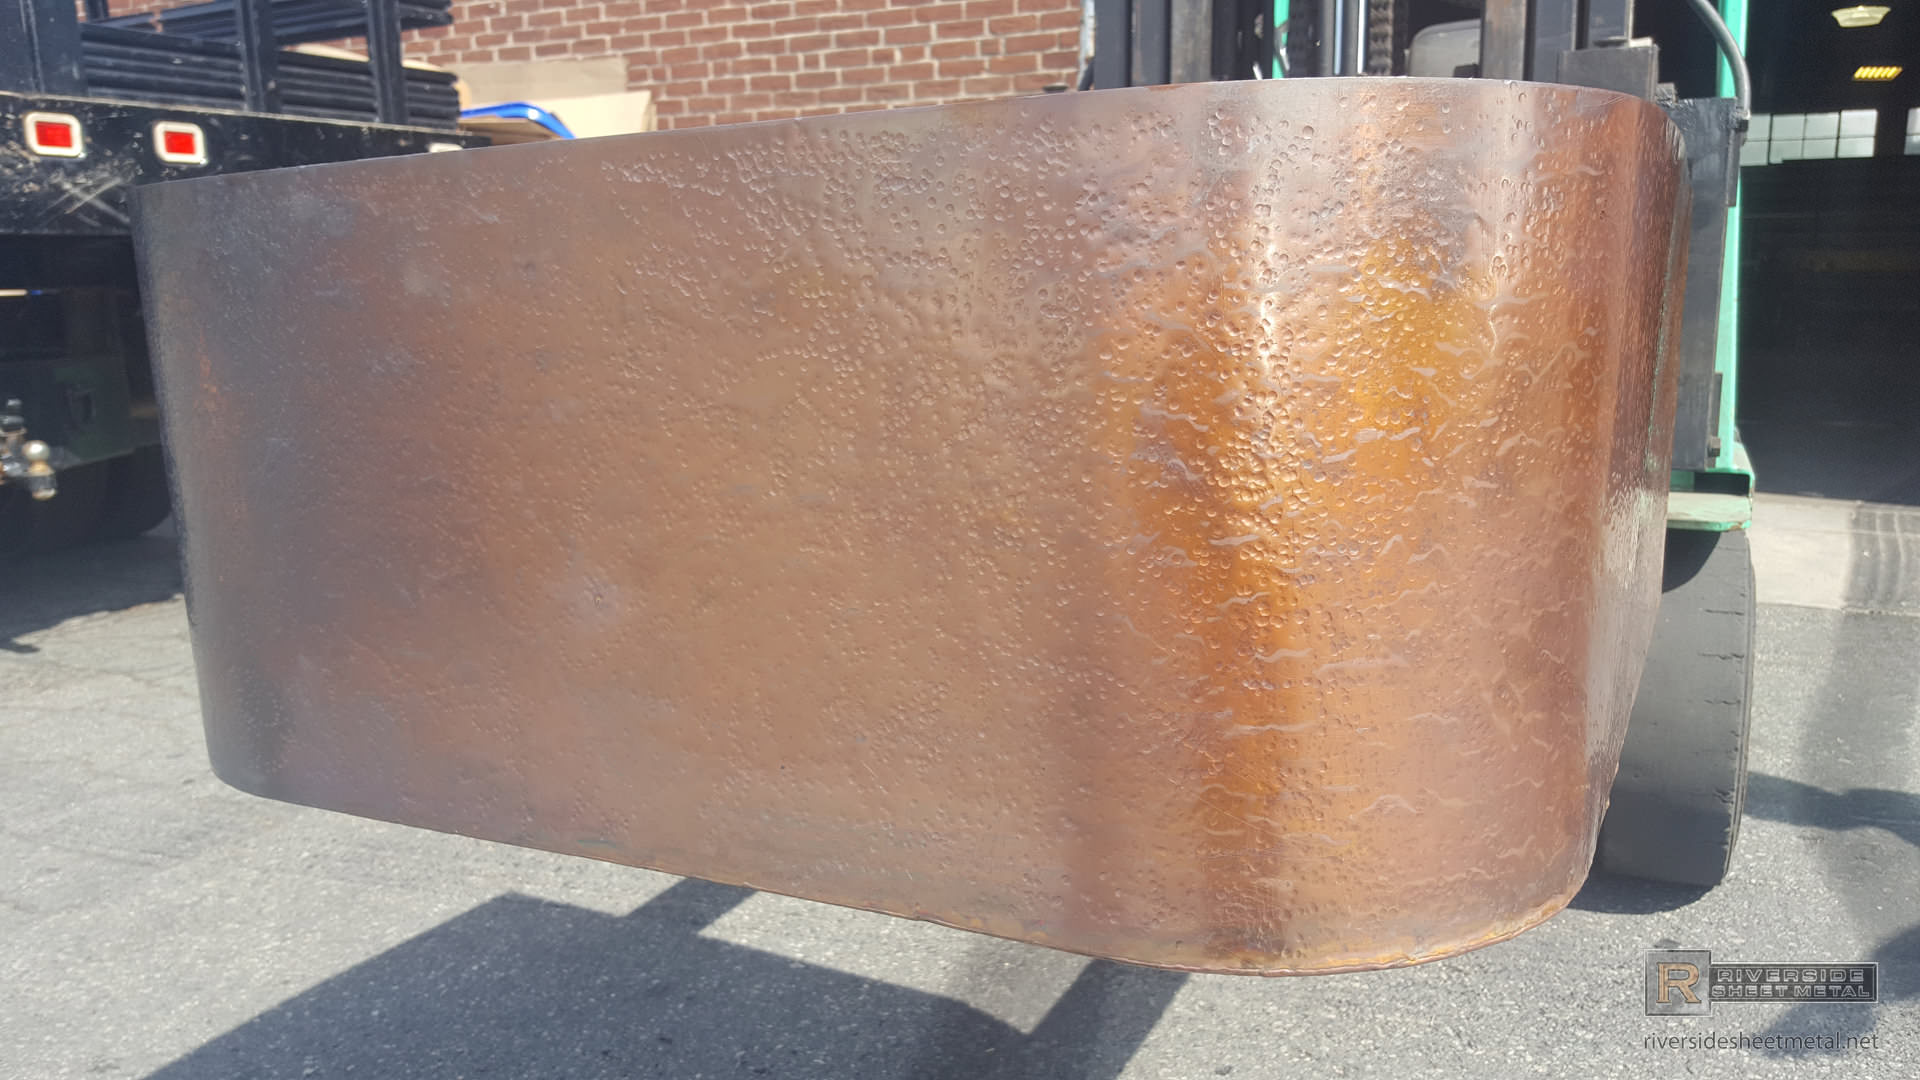 Copper Expanded Sheet Supply - Riverside Sheet Metal - Medford, MA